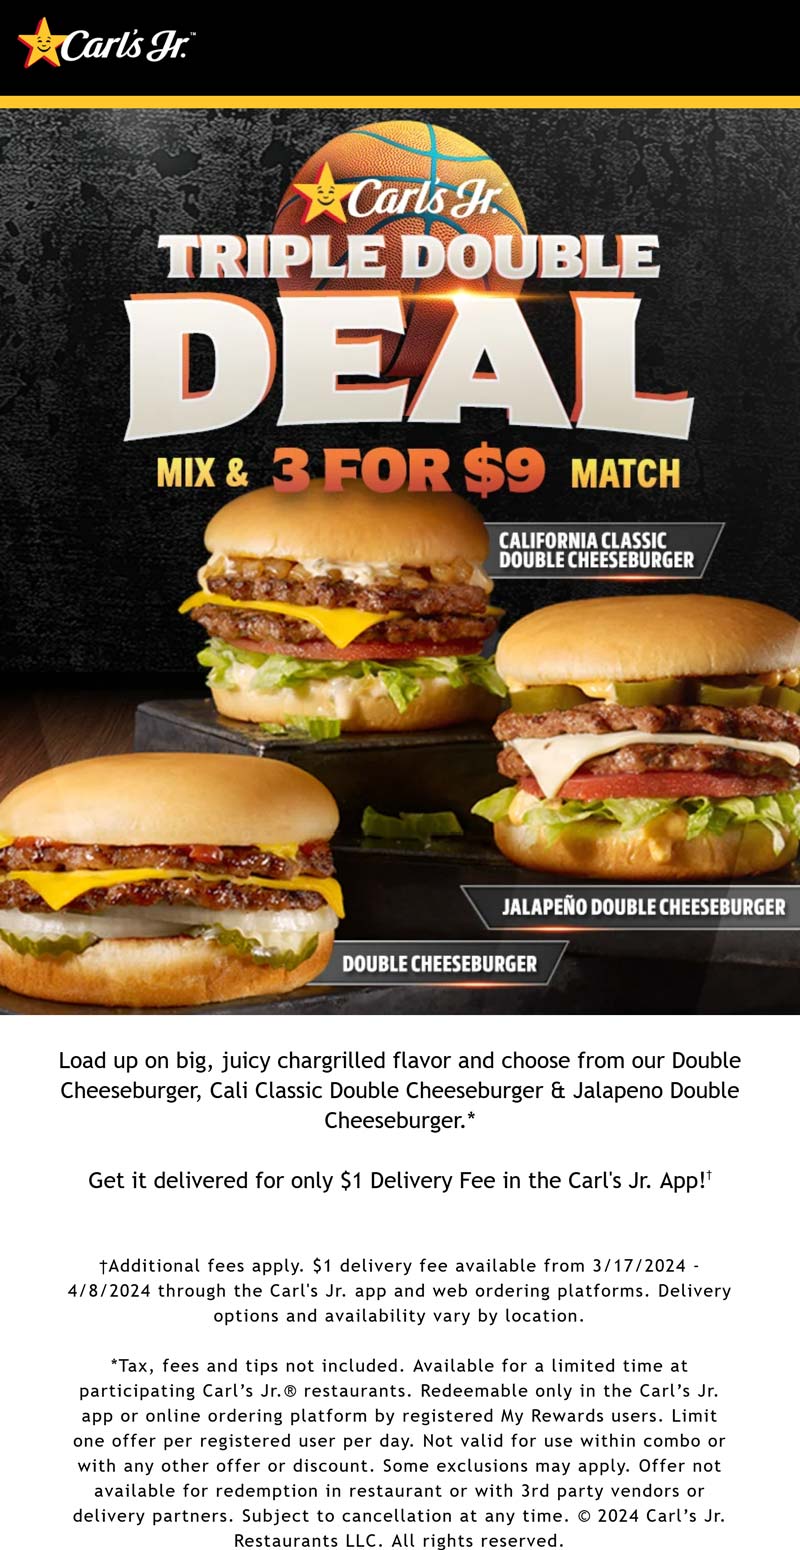 Carls Jr restaurants Coupon  3 double cheeseburgers = $9 online at Carls Jr restaurants #carlsjr 